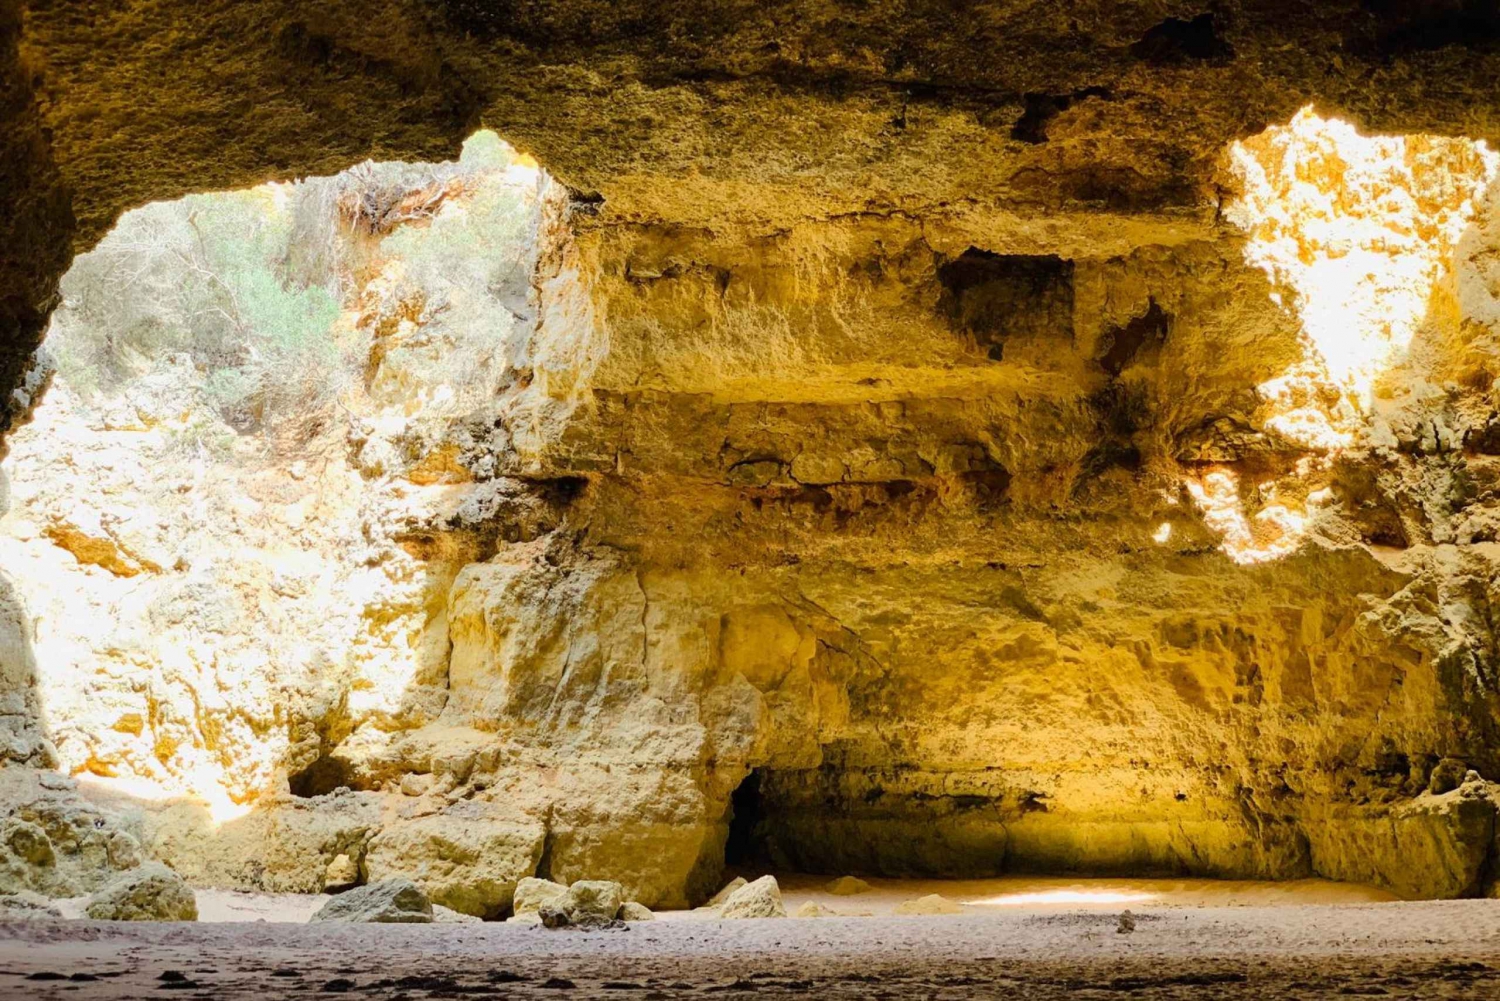 Armação de Pêra: Guided Boat Tour of Benagil's 15 Best Caves